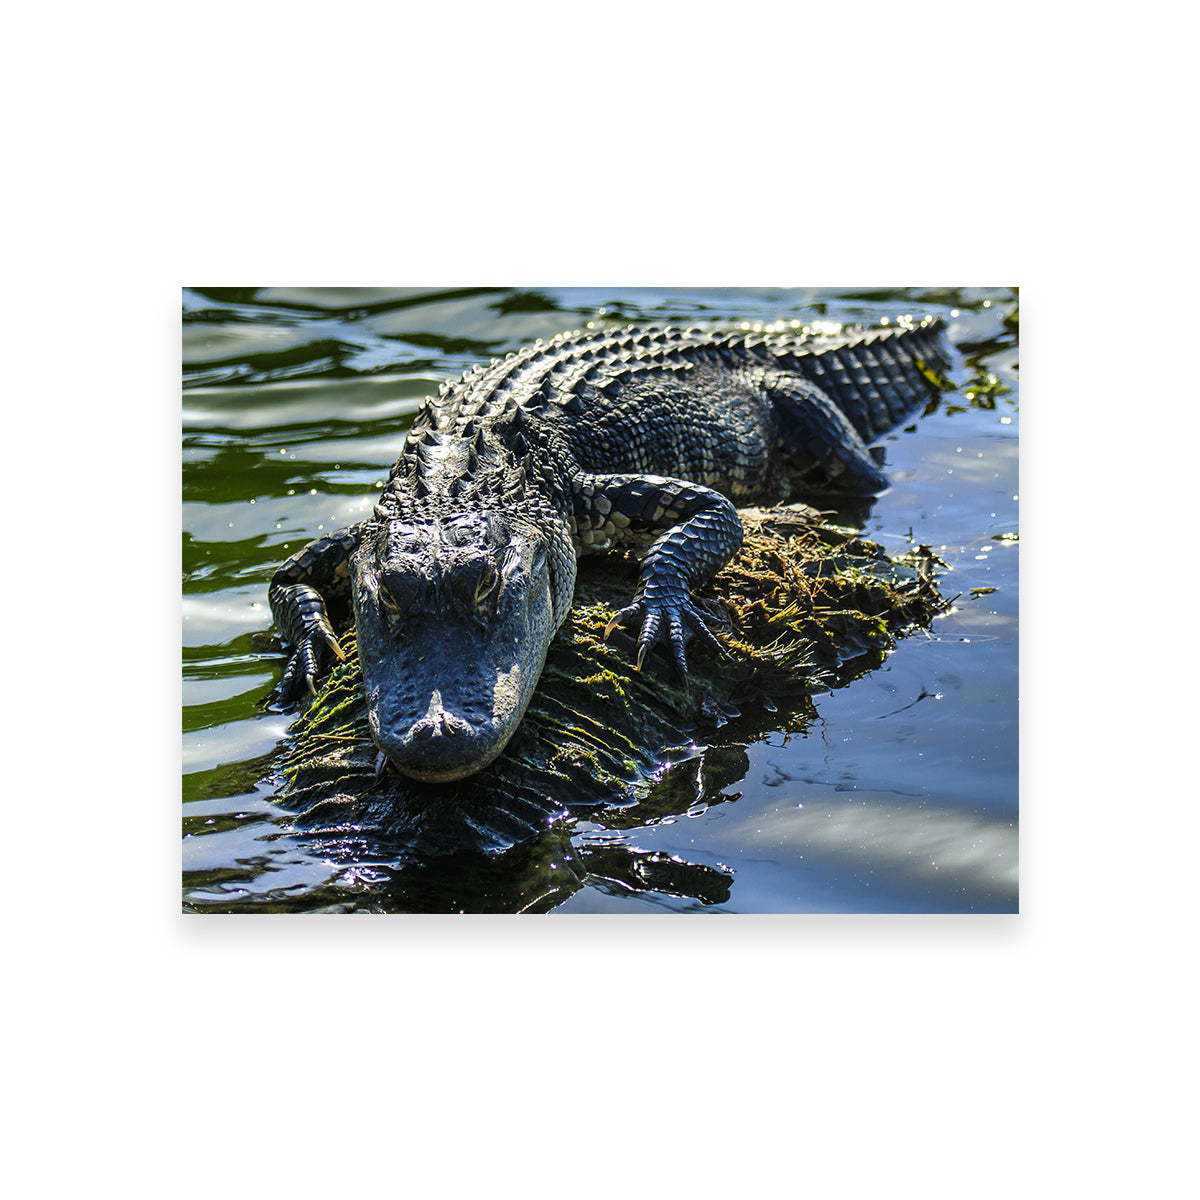 Florida Alligator